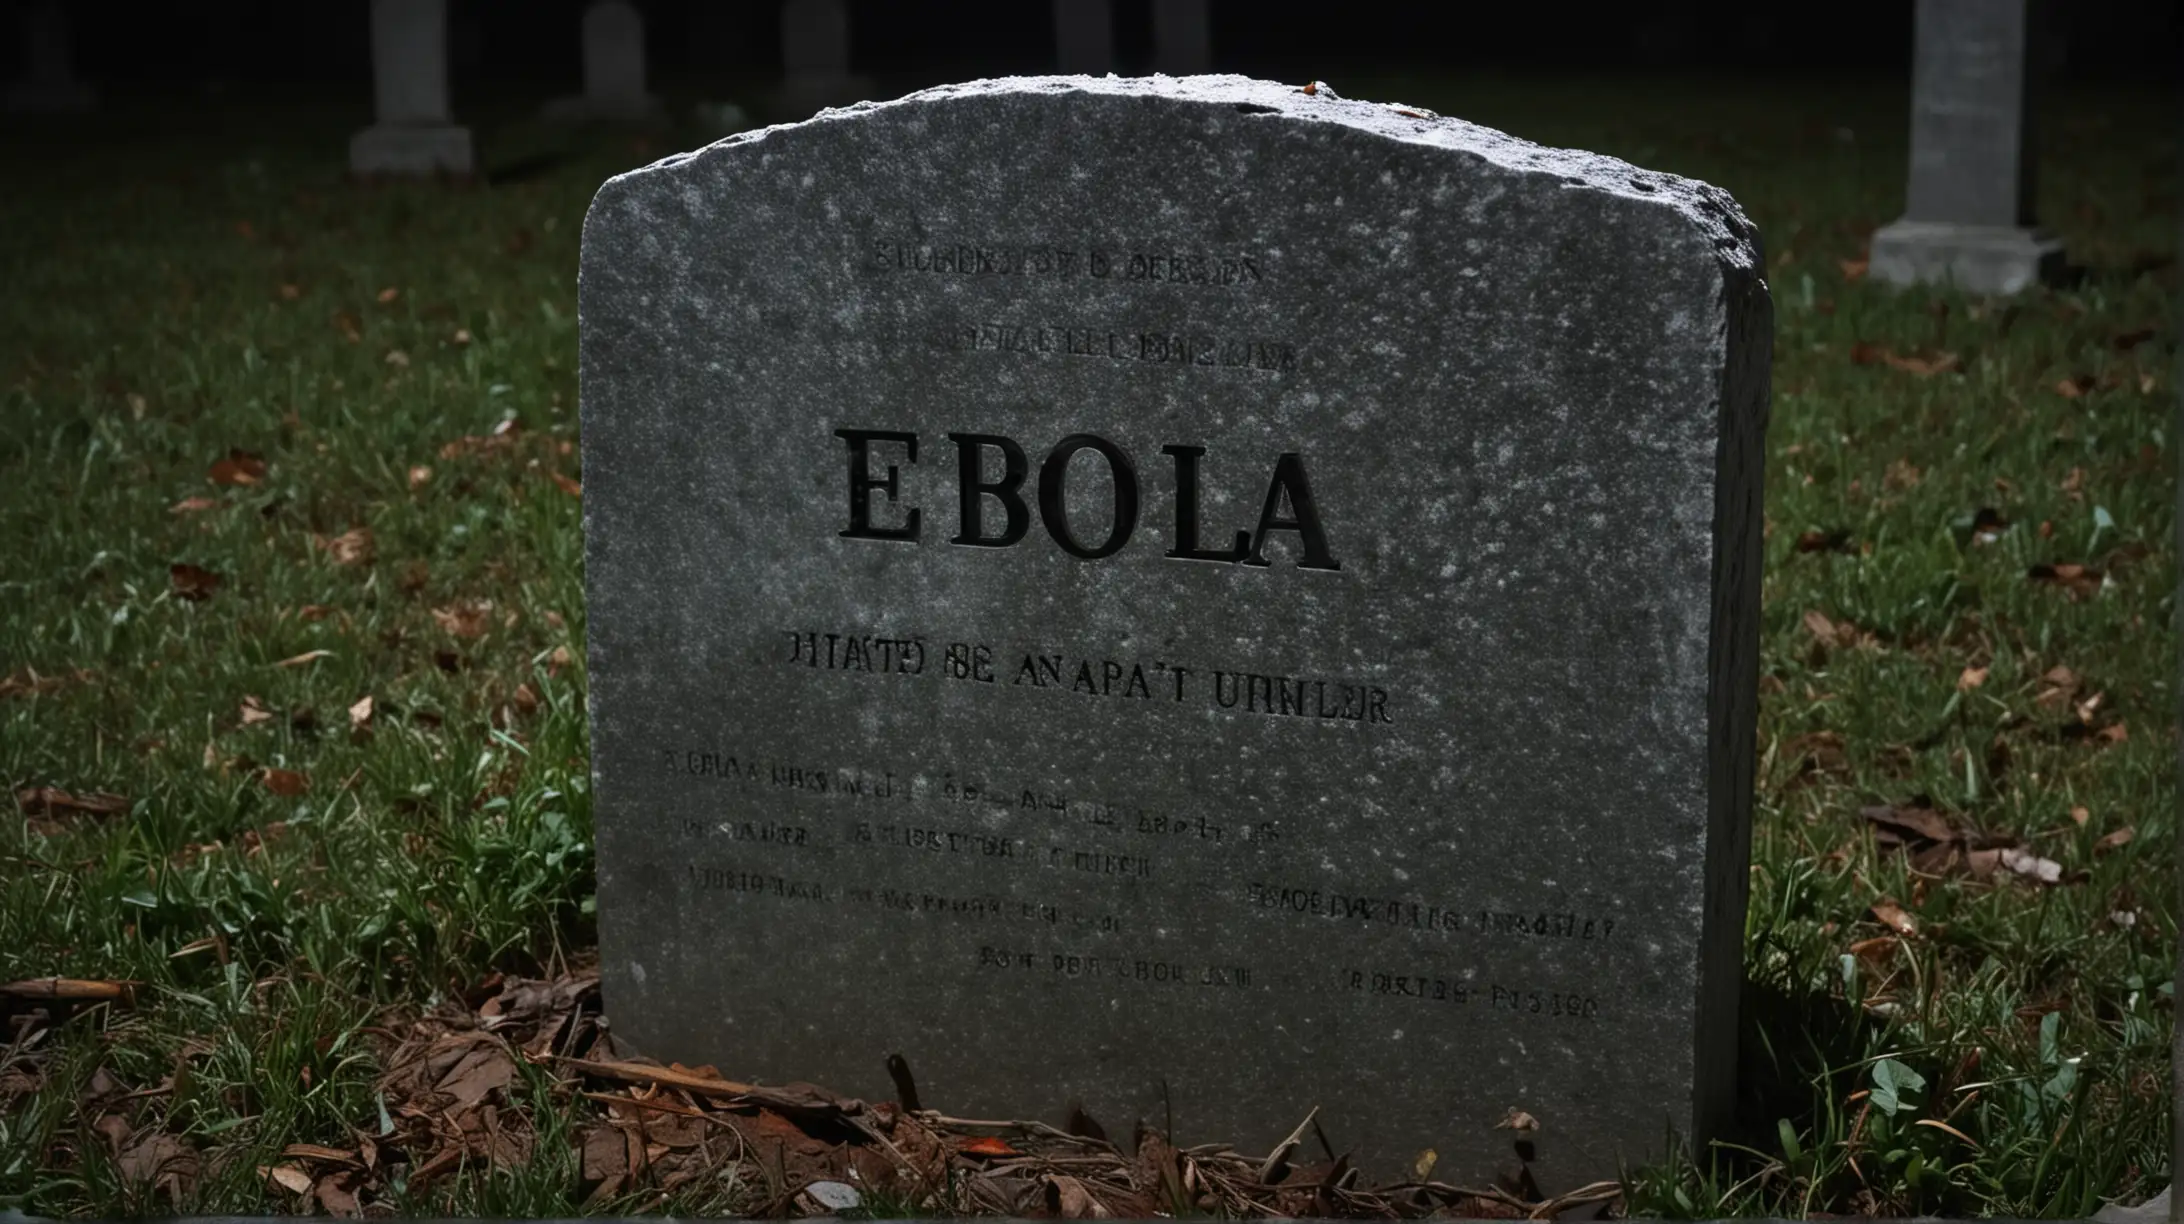 Creepy Night Scene with Ebola Gravestone in Spooky Graveyard